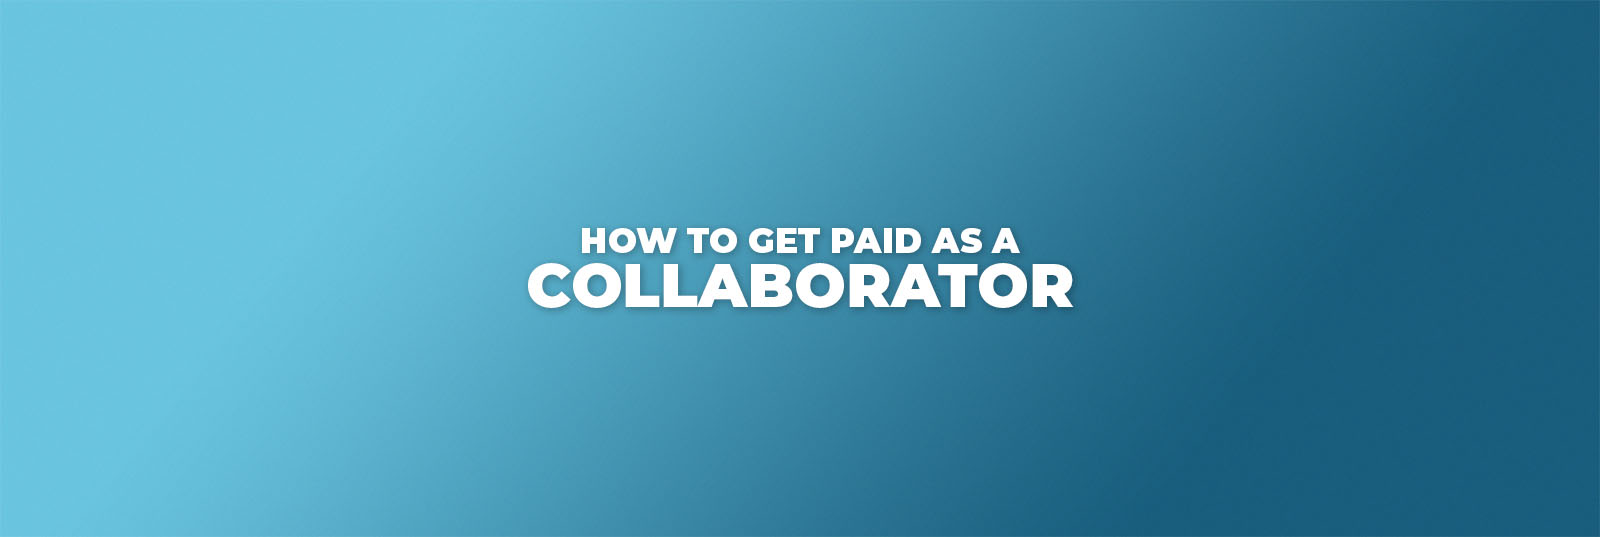 collabpay-get-paid-as-collaborator